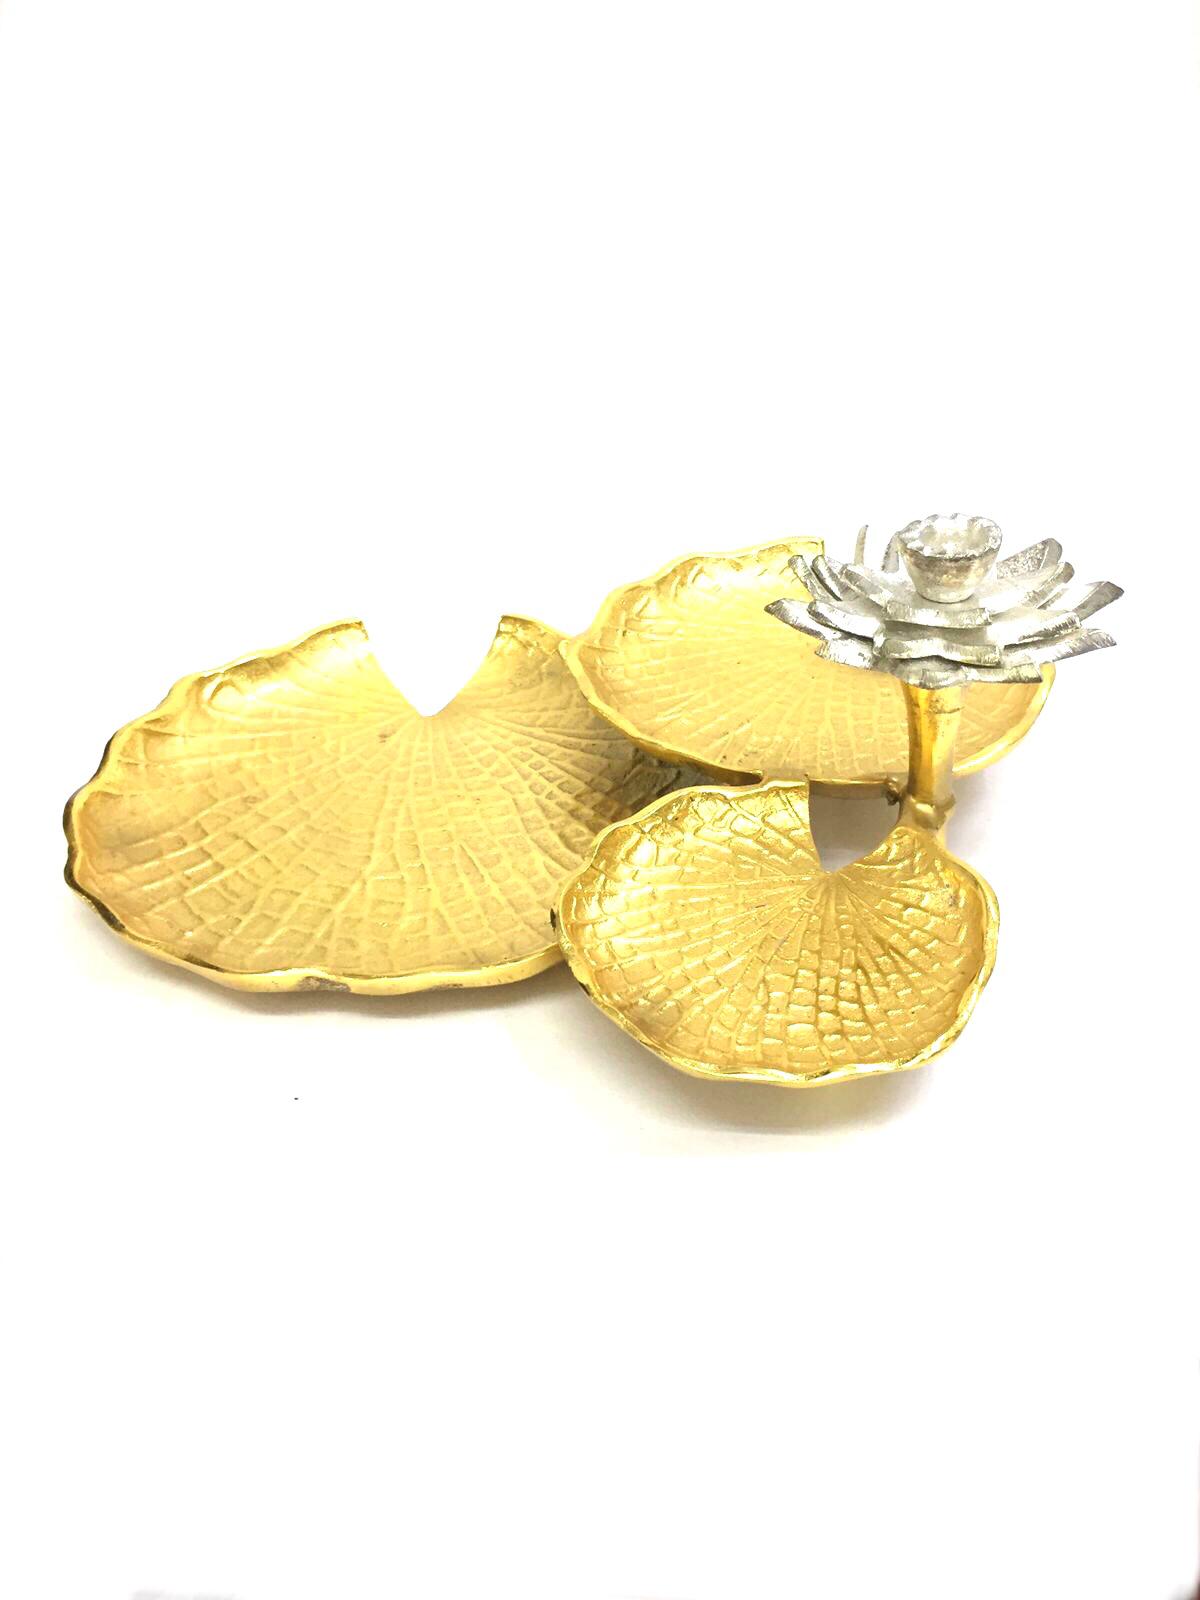 Metal Leaf Platters Lotus Spiral Designs With Flower Serving Ideas Tamrapatra